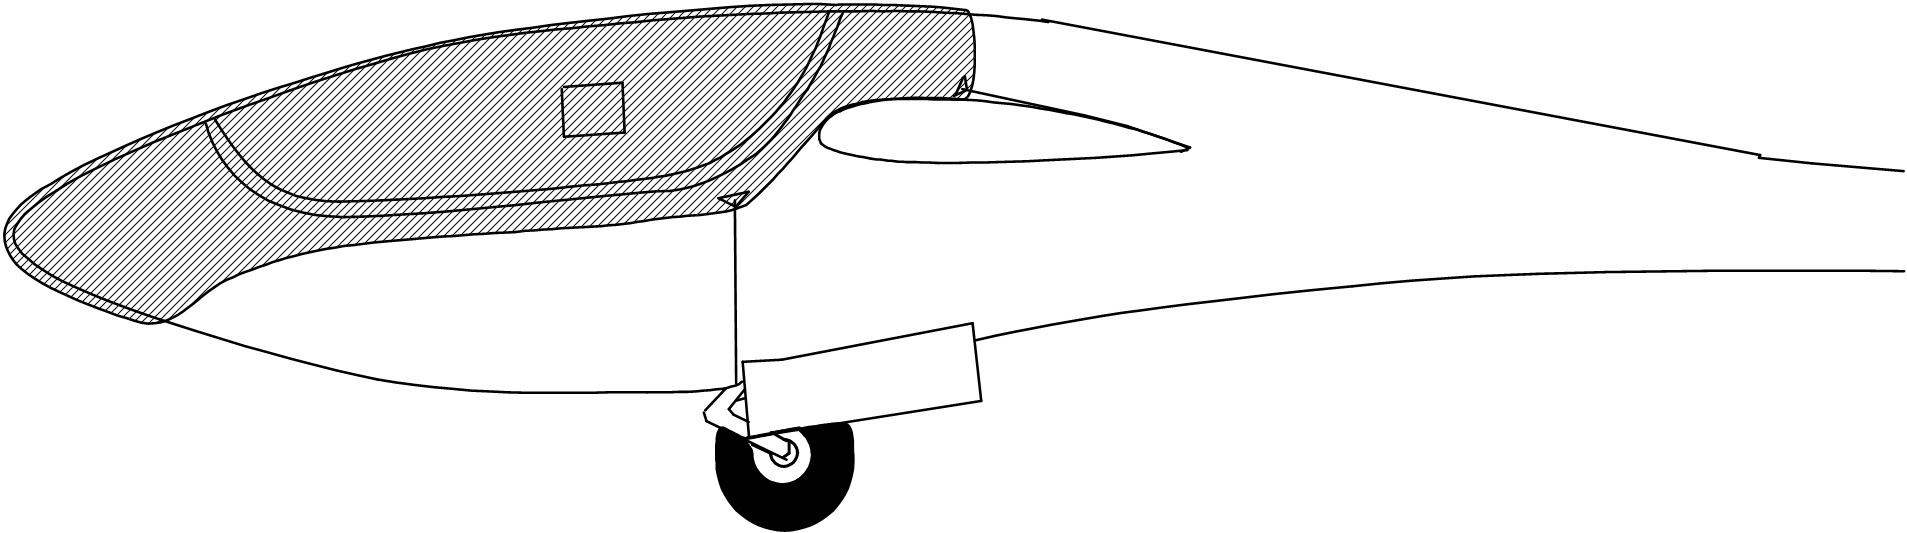 Haubenbezug/Cockpit-Cover Doppelsitzer side by side z.B. Stemme S10 Allwetter/einlagig JAXIDA 